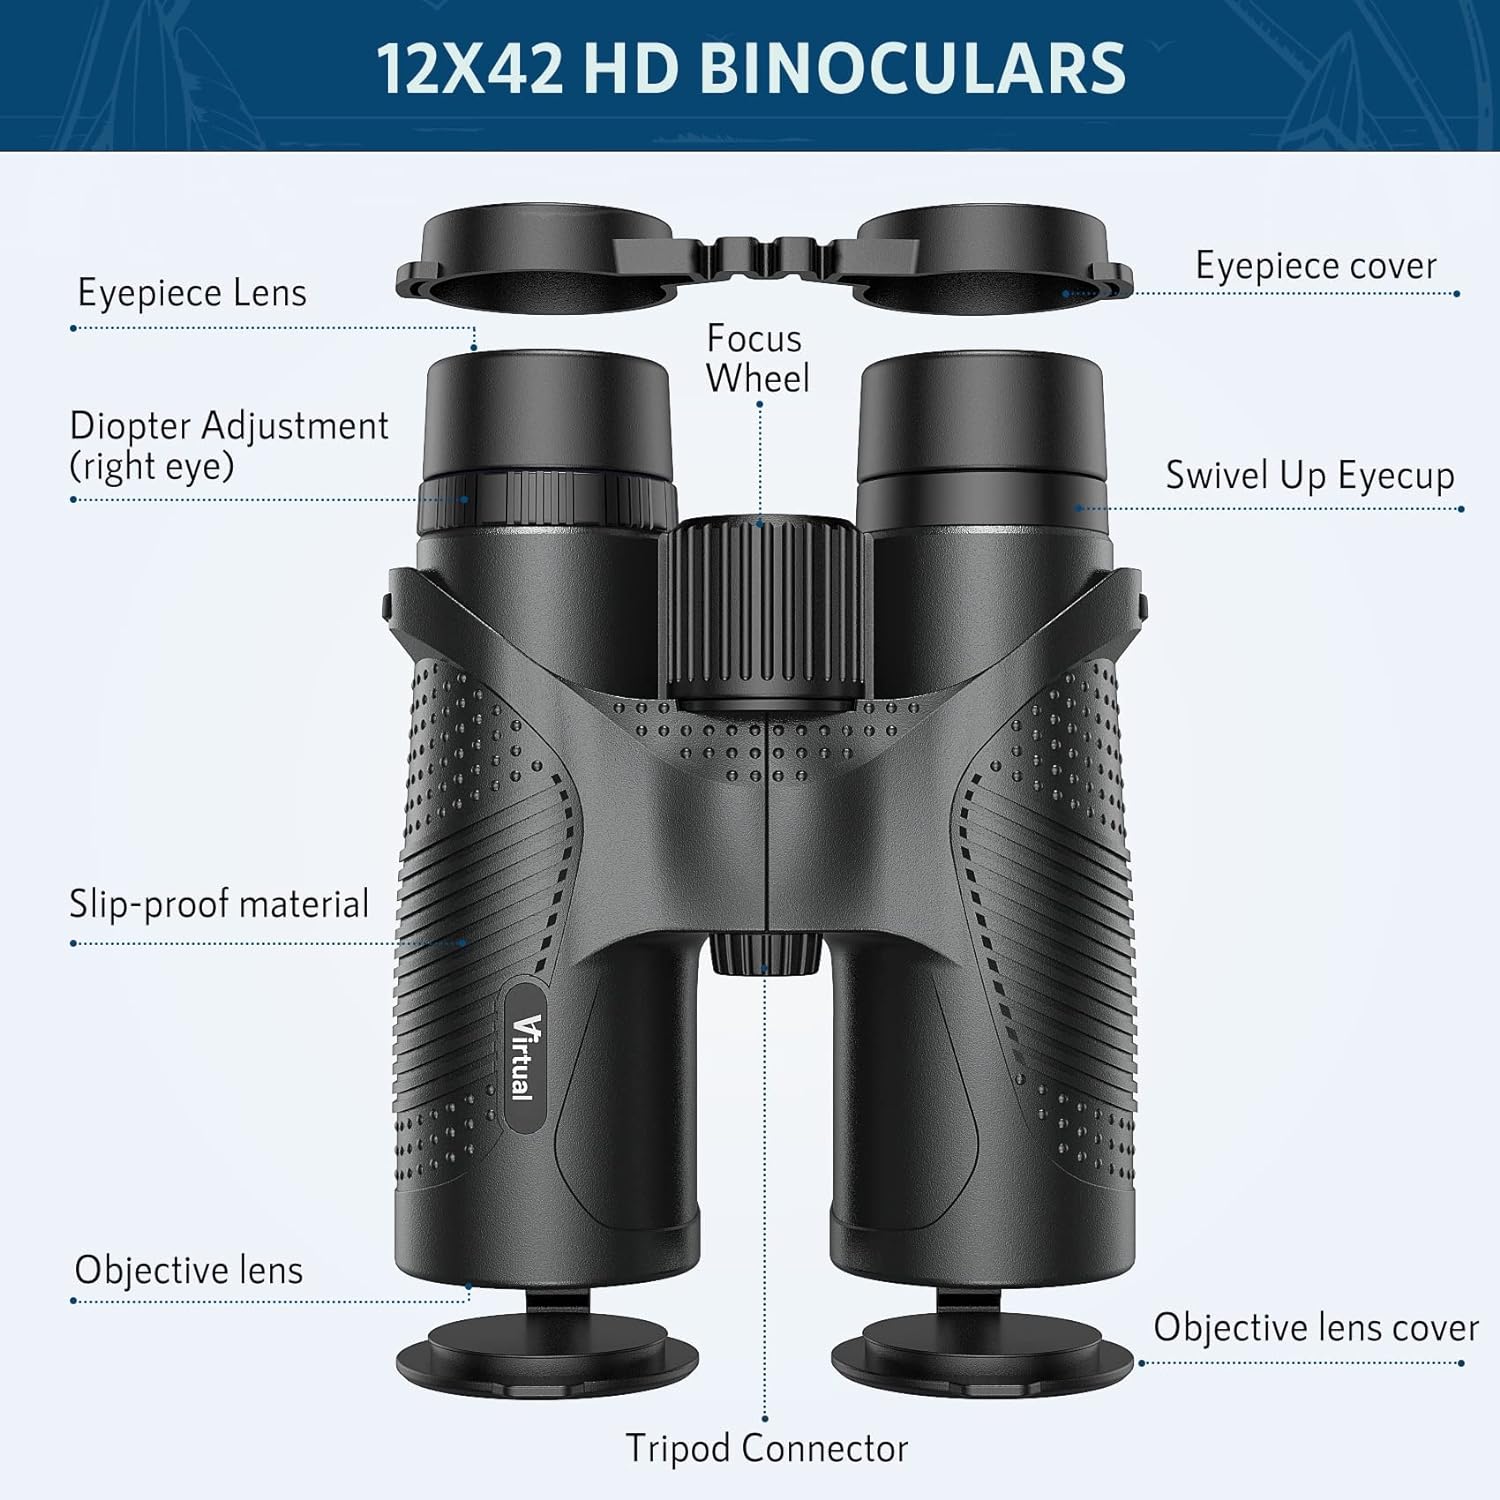 12X42 HD Binoculars for Adults, Virtual High Power Binoculars with BaK4 Prisms FMC Lens, IPX7 Waterproof Binoculars with Phone Adapter Binoculars for Bird Watching, Hunting, Hiking, Travel, Concert